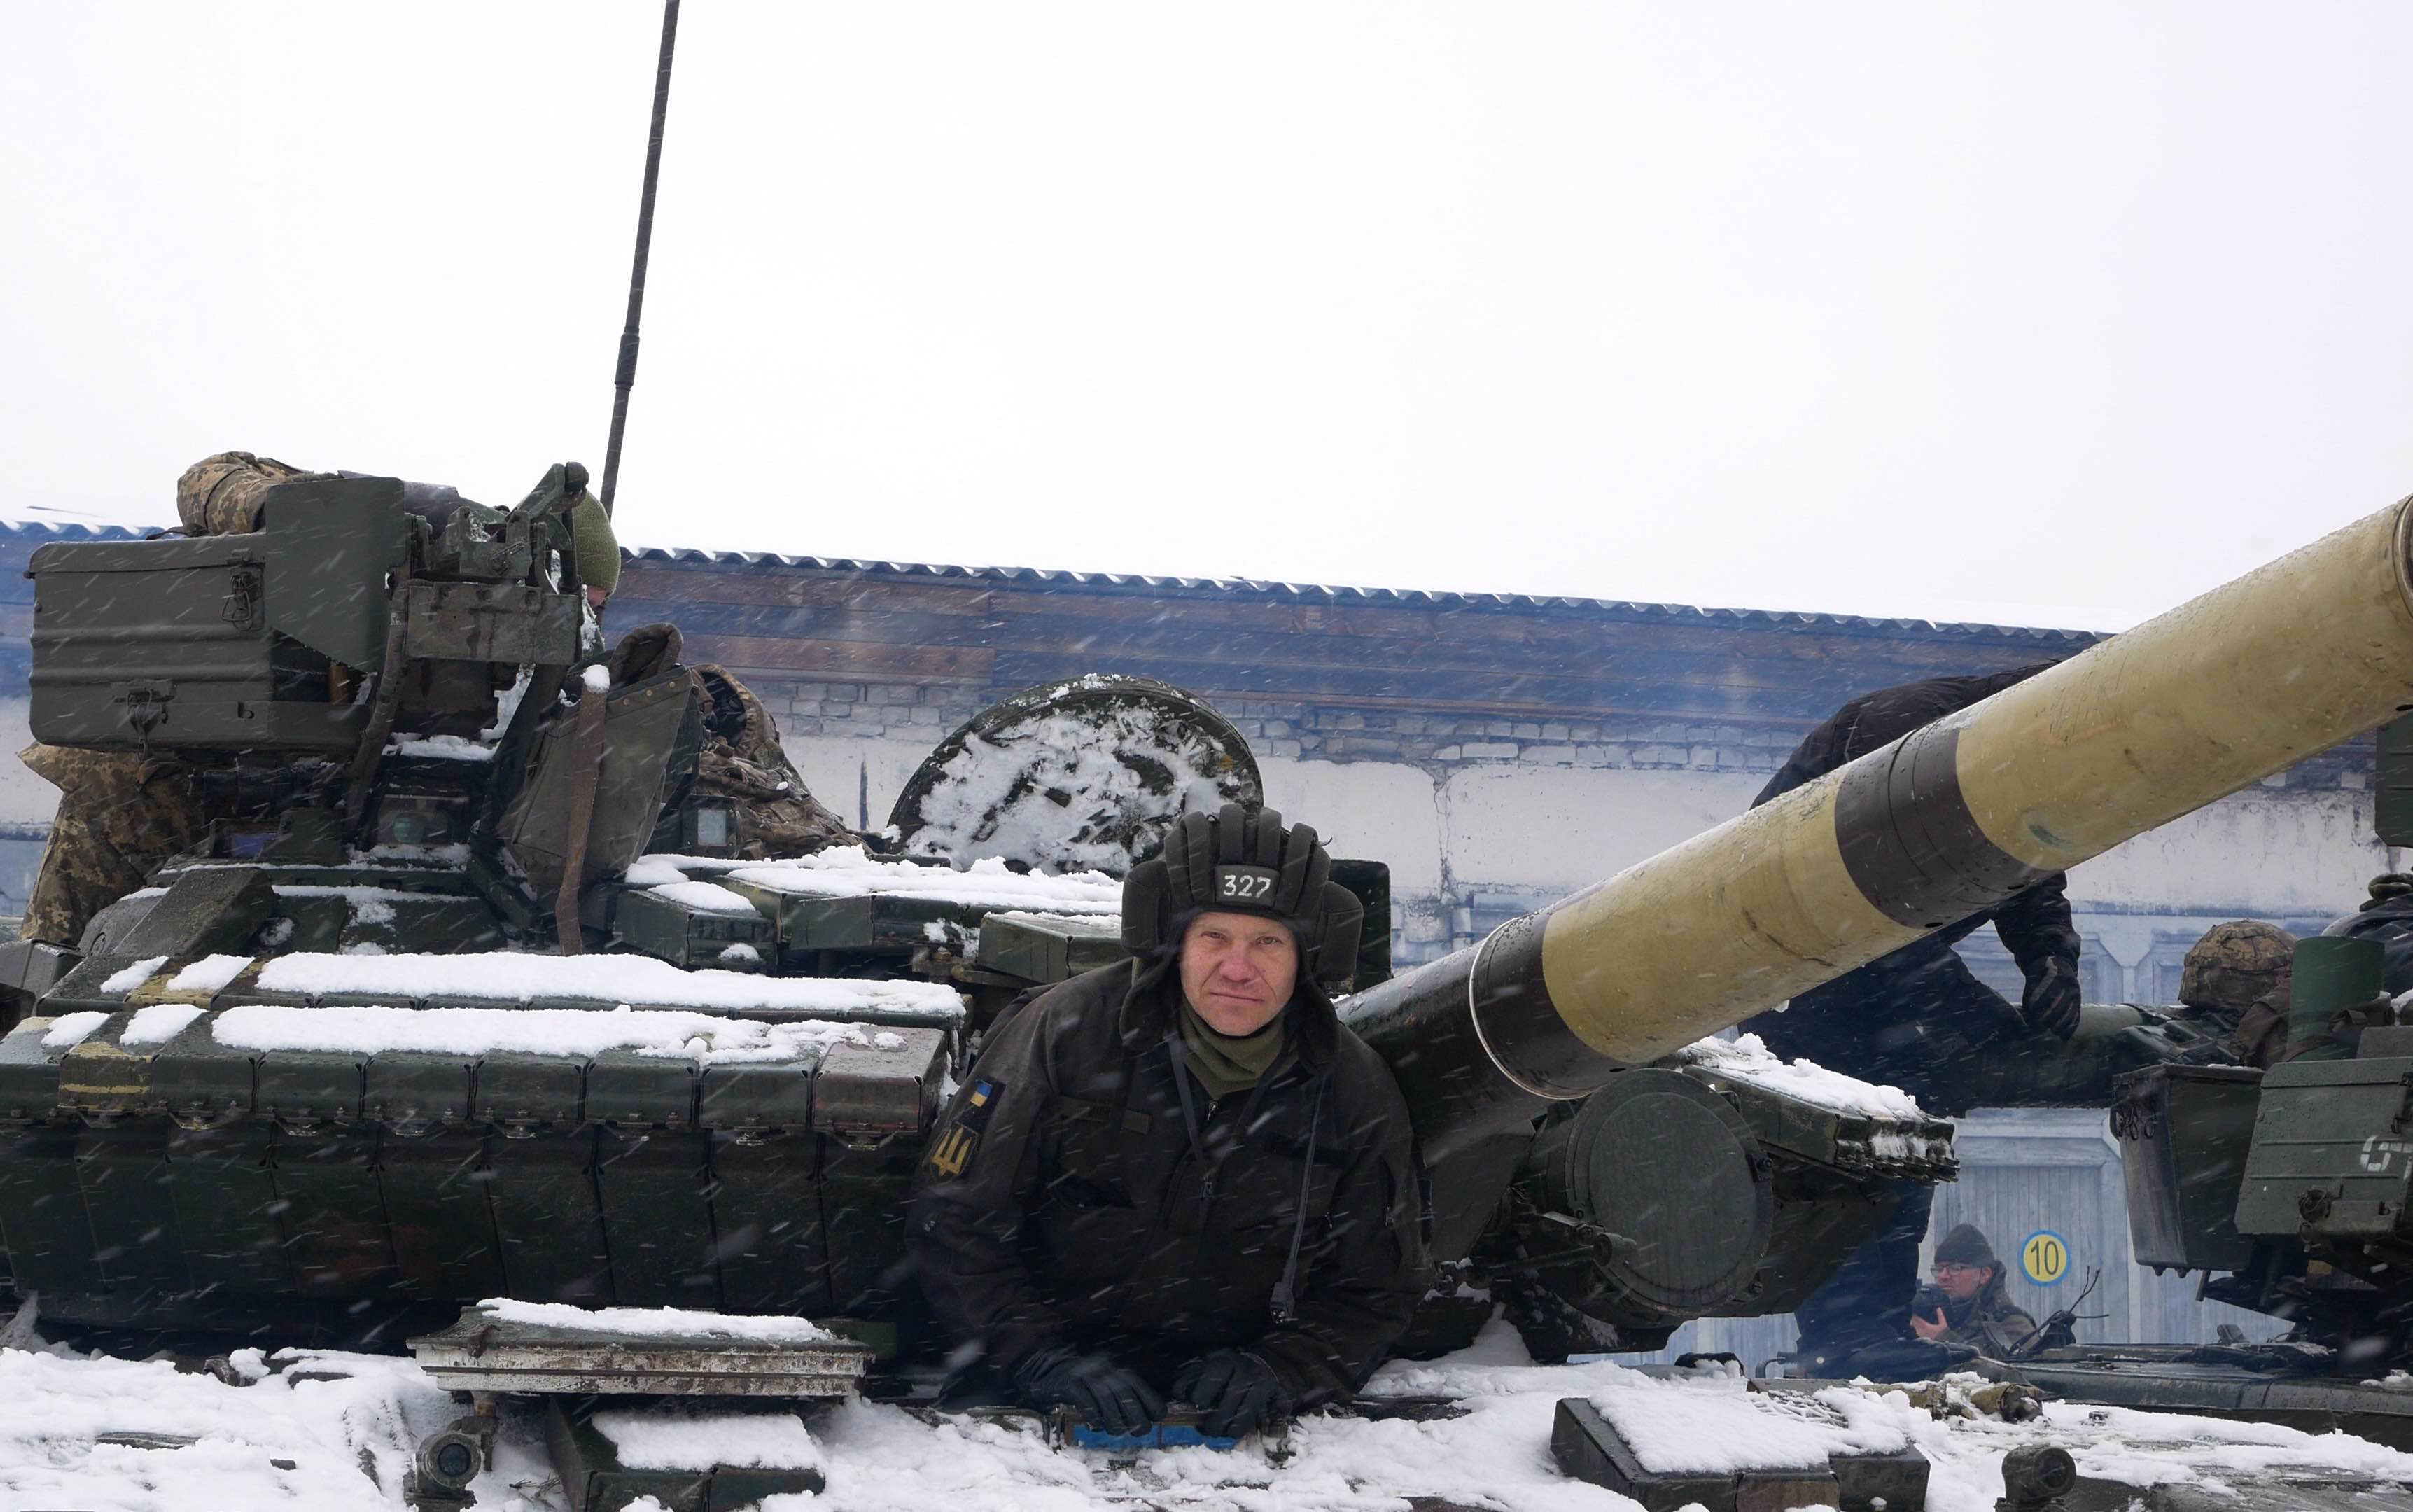 Ukraine army tank operator